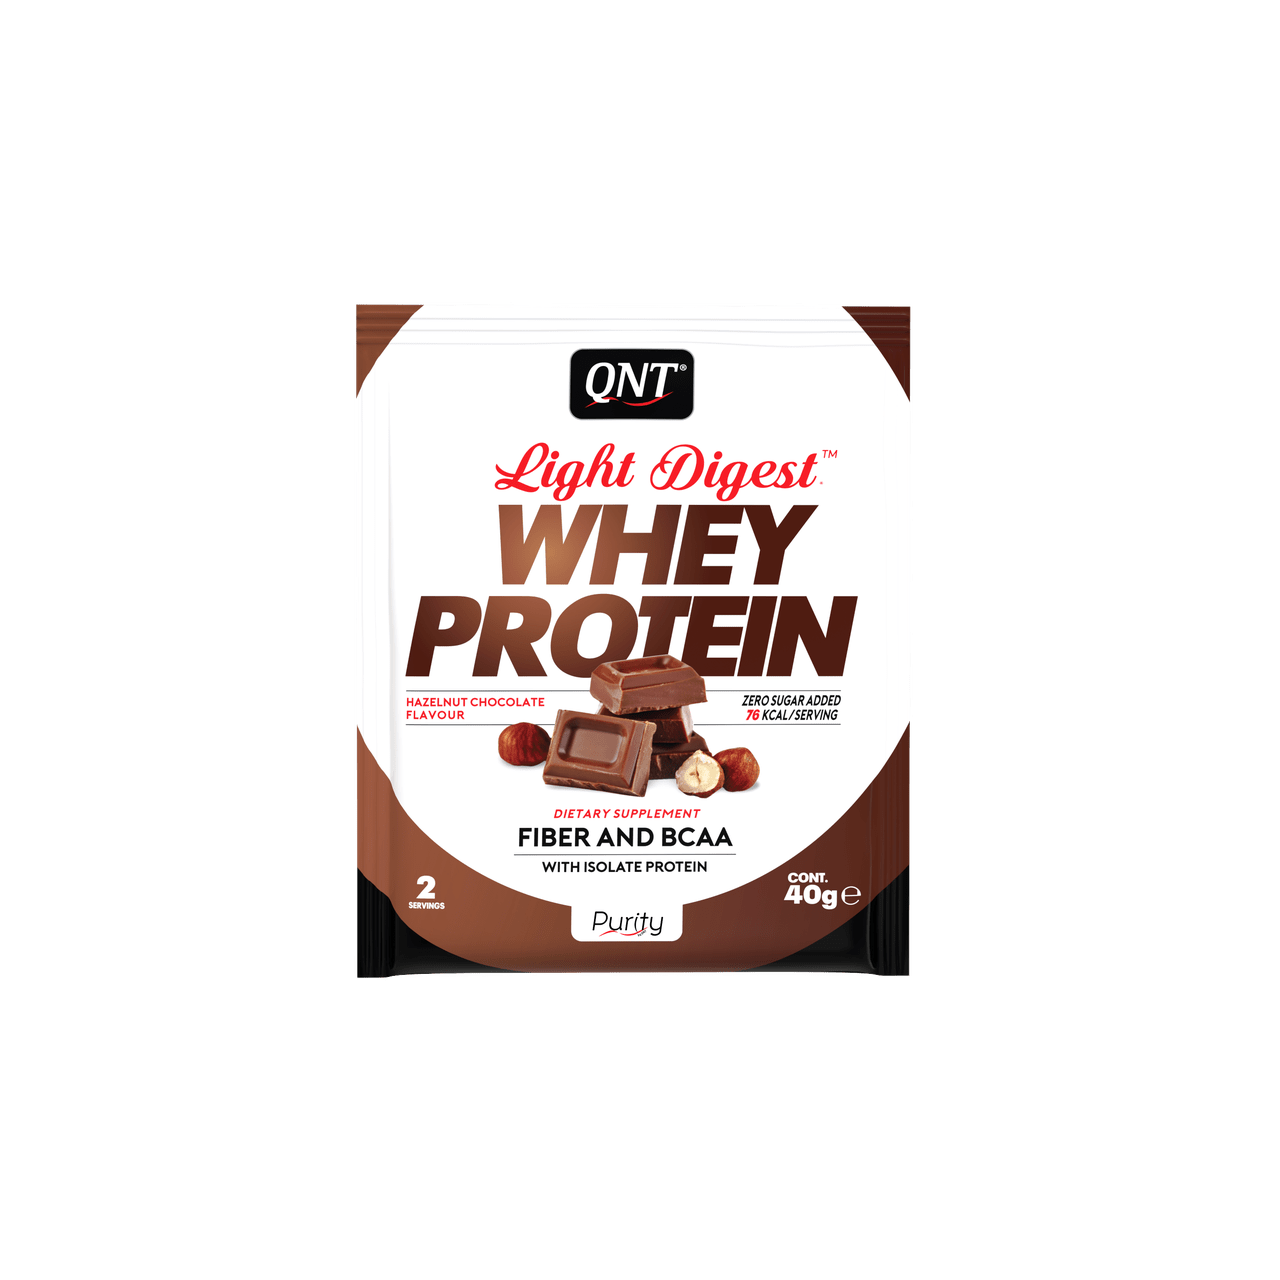 Сывороточный протеин концентрат QNT Light Digest Whey protein (500 г) кюнт nut chocolate,  ml, QNT. Whey Concentrate. Mass Gain स्वास्थ्य लाभ Anti-catabolic properties 